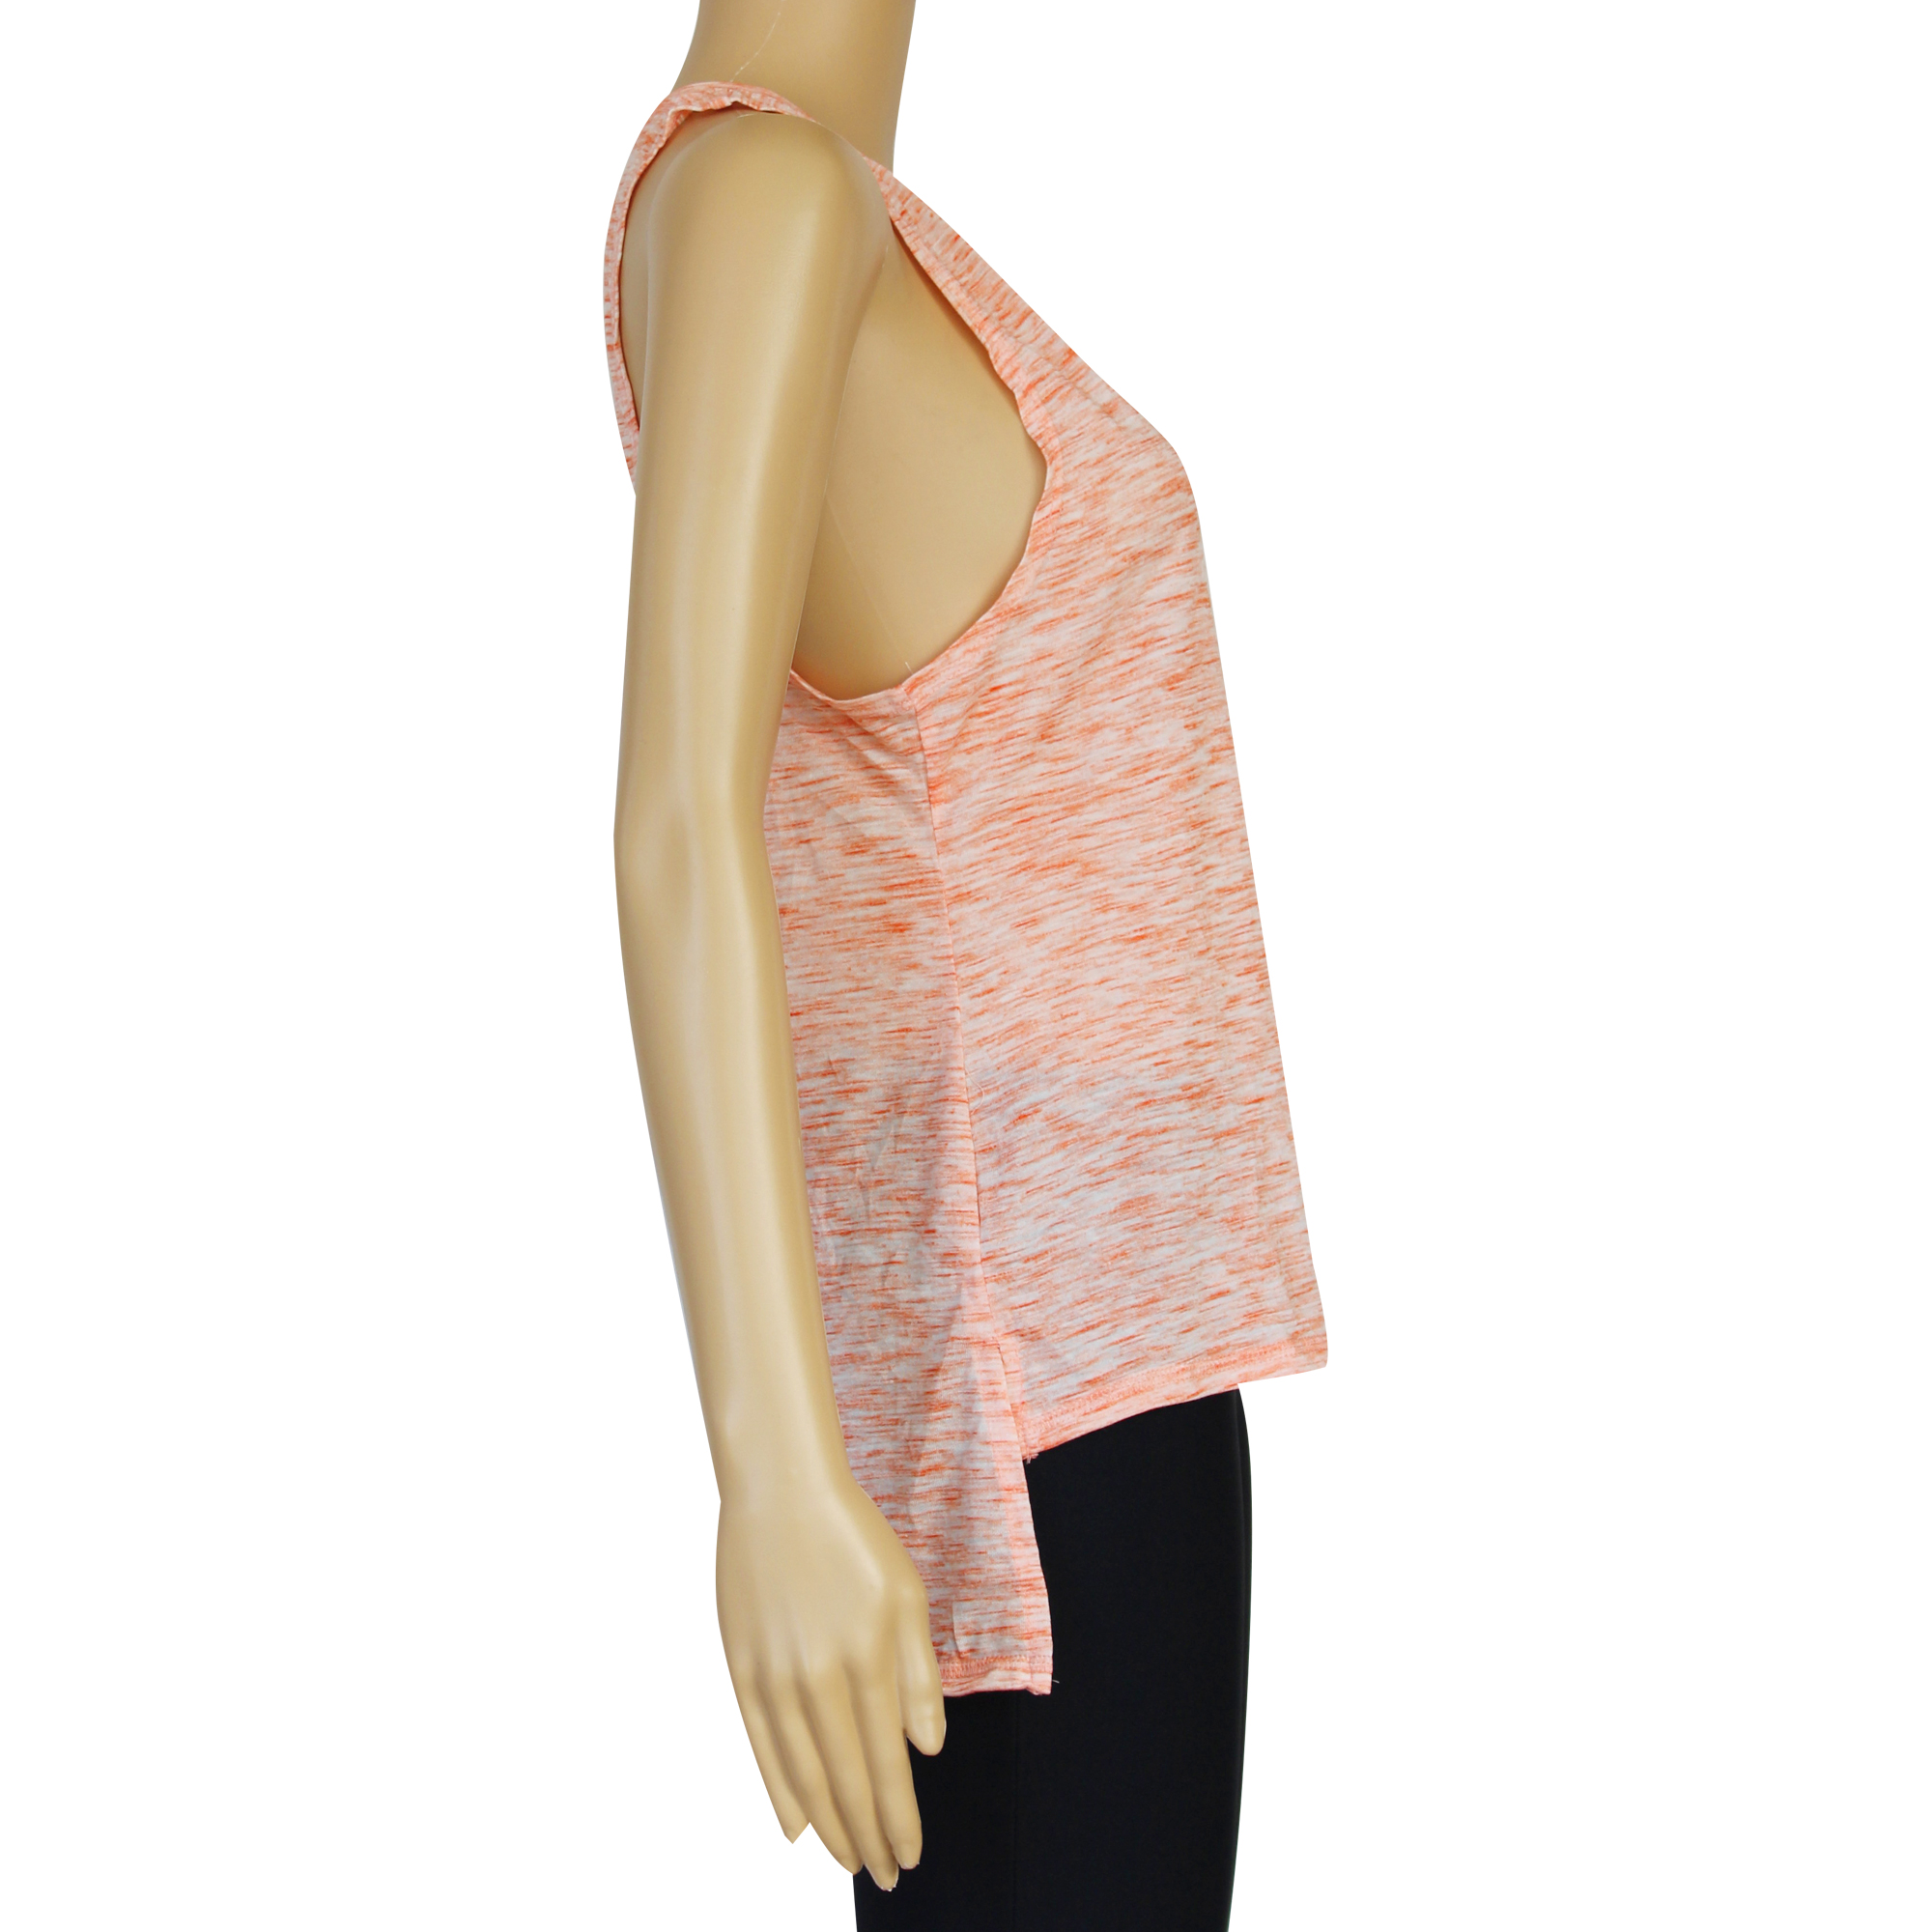 Women's Yoga Tank Tops Activewear Tops Long Workout Shirts Racerback Quick Dry Orange - S - image 2 of 4